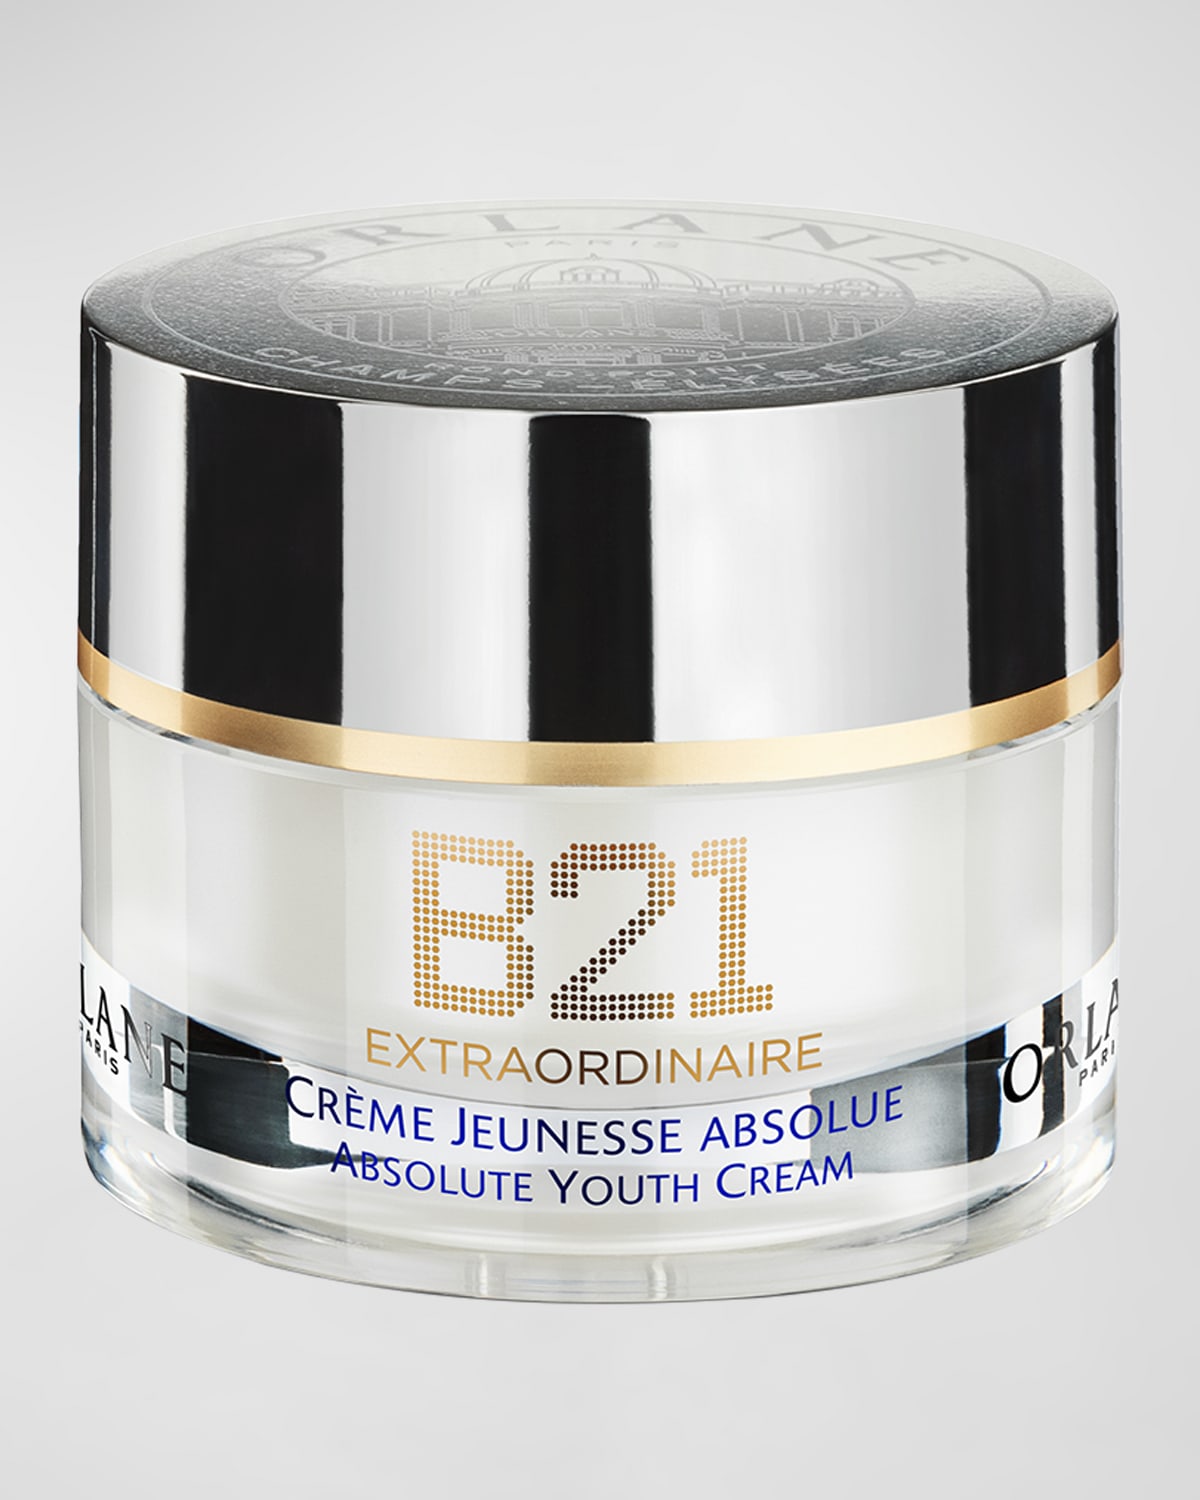 B21 Extraordinaire Absolute Youth Cream, 1.7 oz.